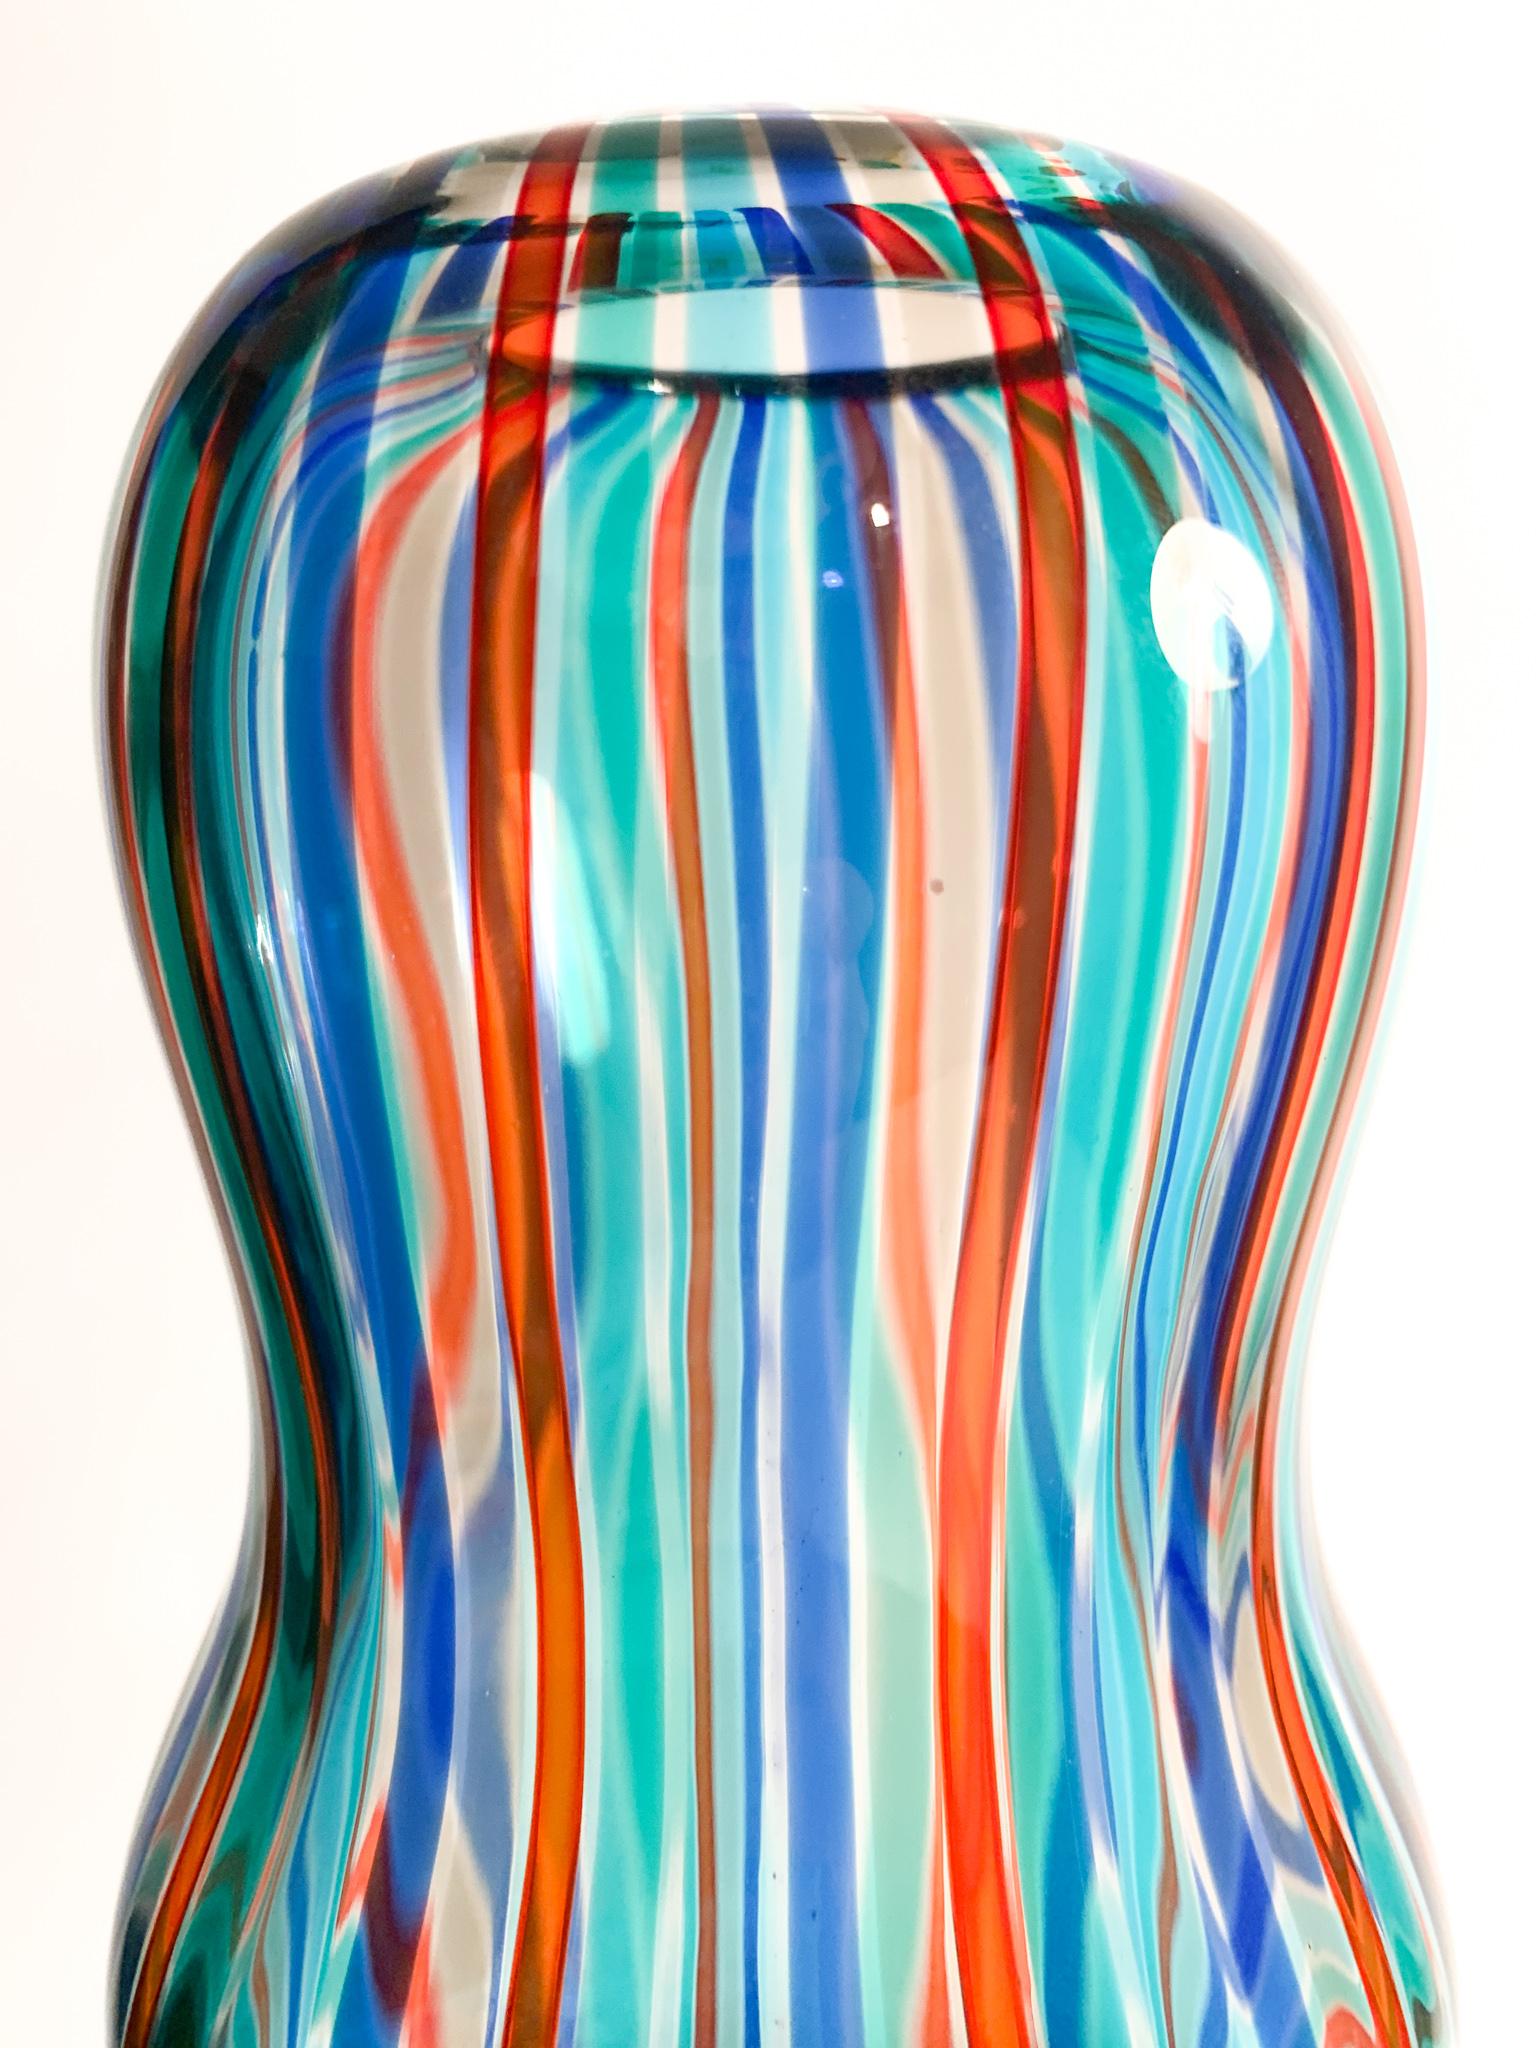 Vase „Arado“ von Alessandro Mendini für Venini aus dem Jahr 1988 im Angebot 9